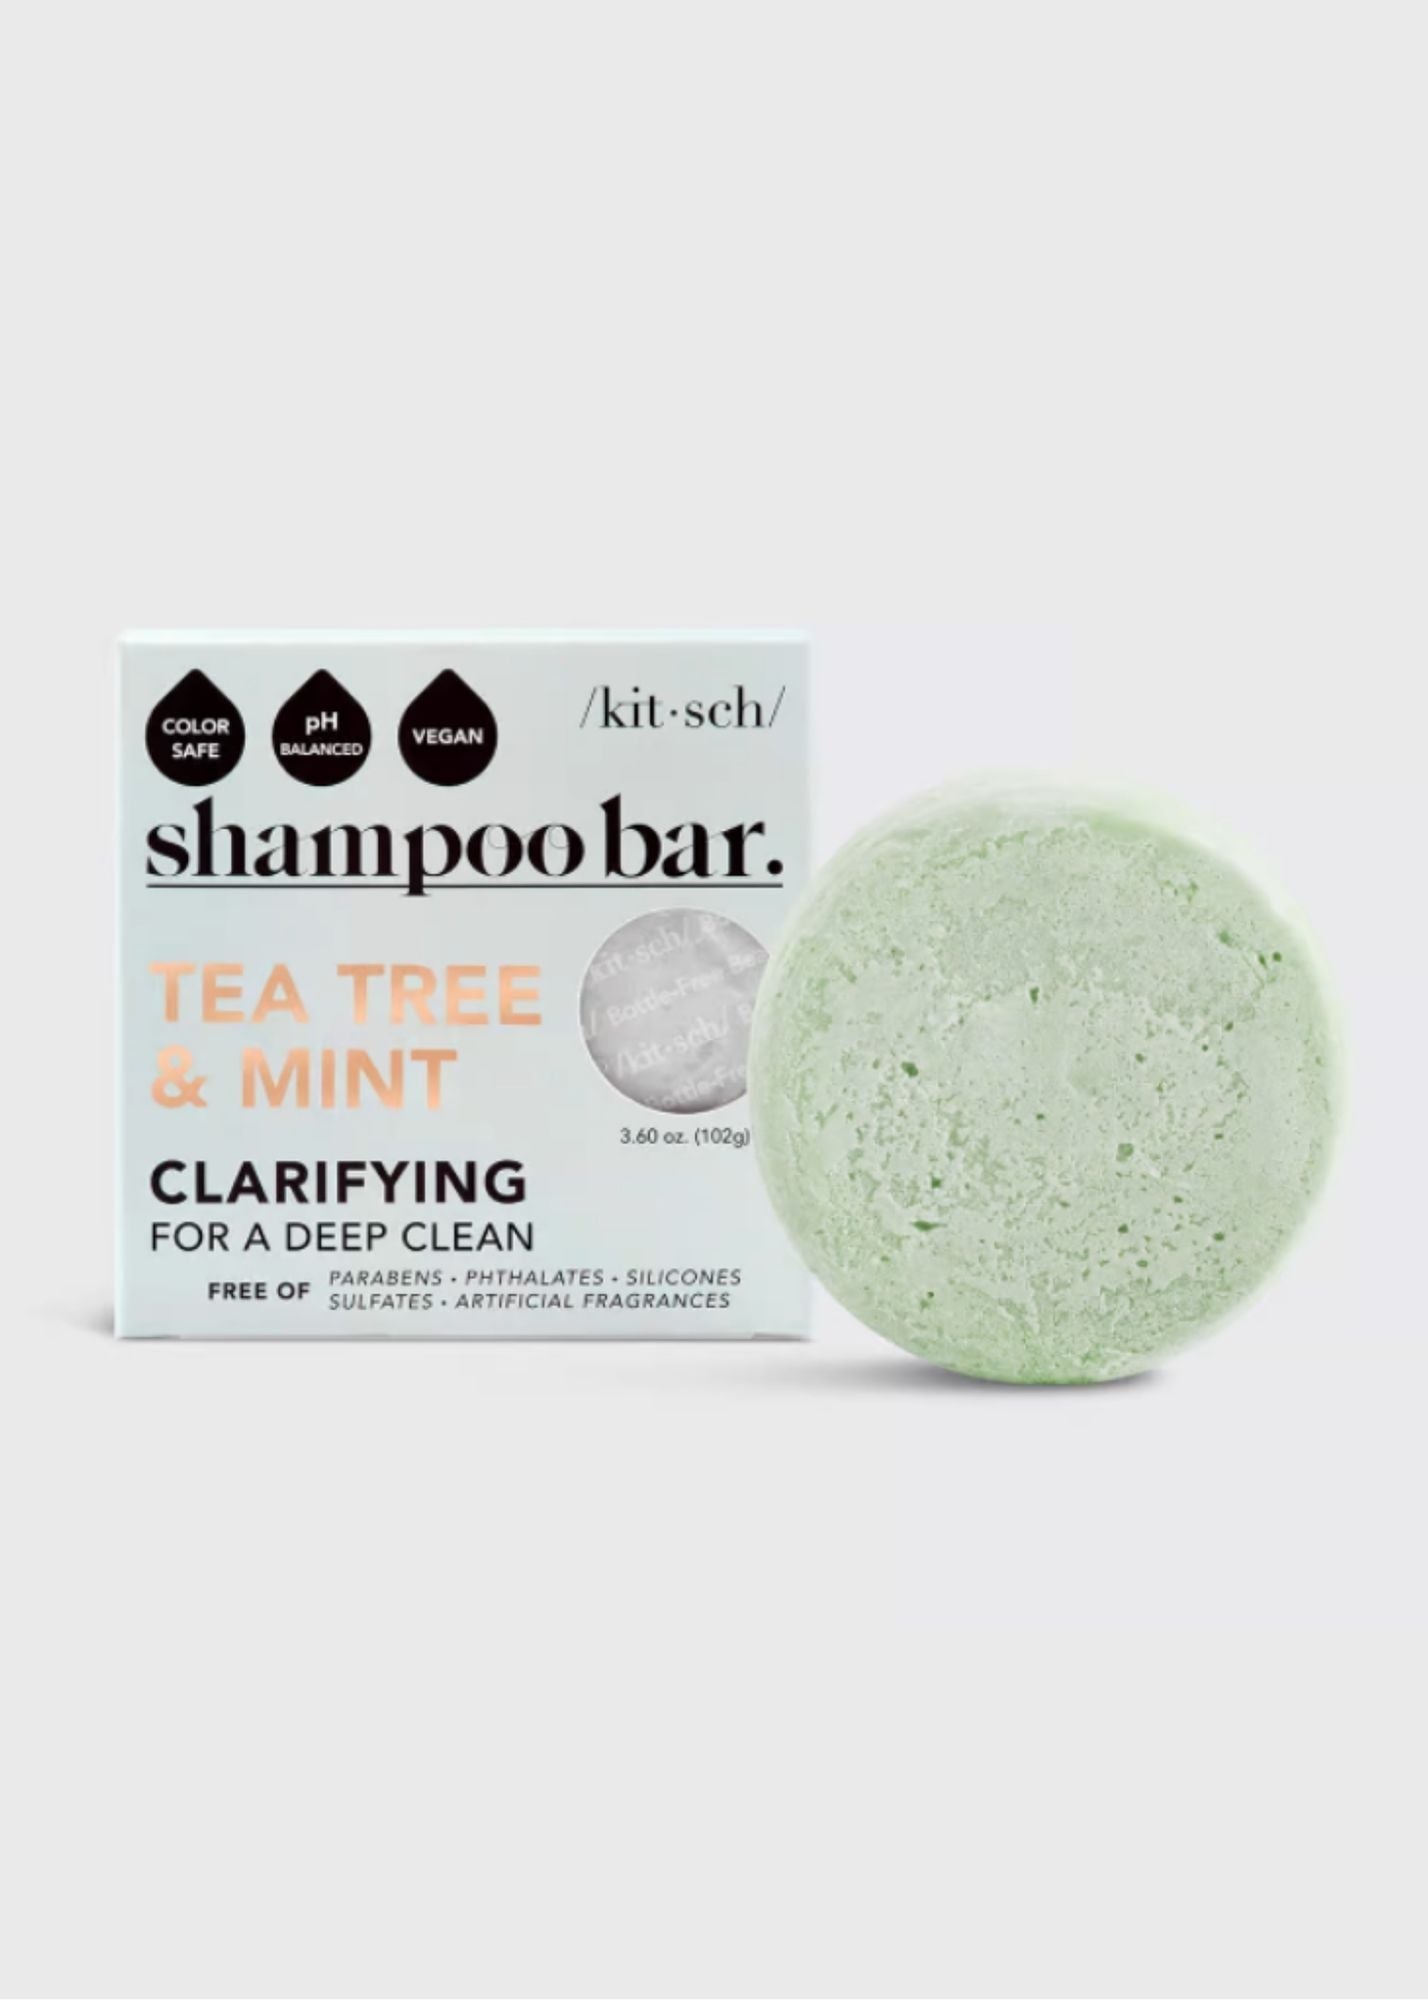 Tea Tree & Mint Clarifying Shampoo Bar Gifts